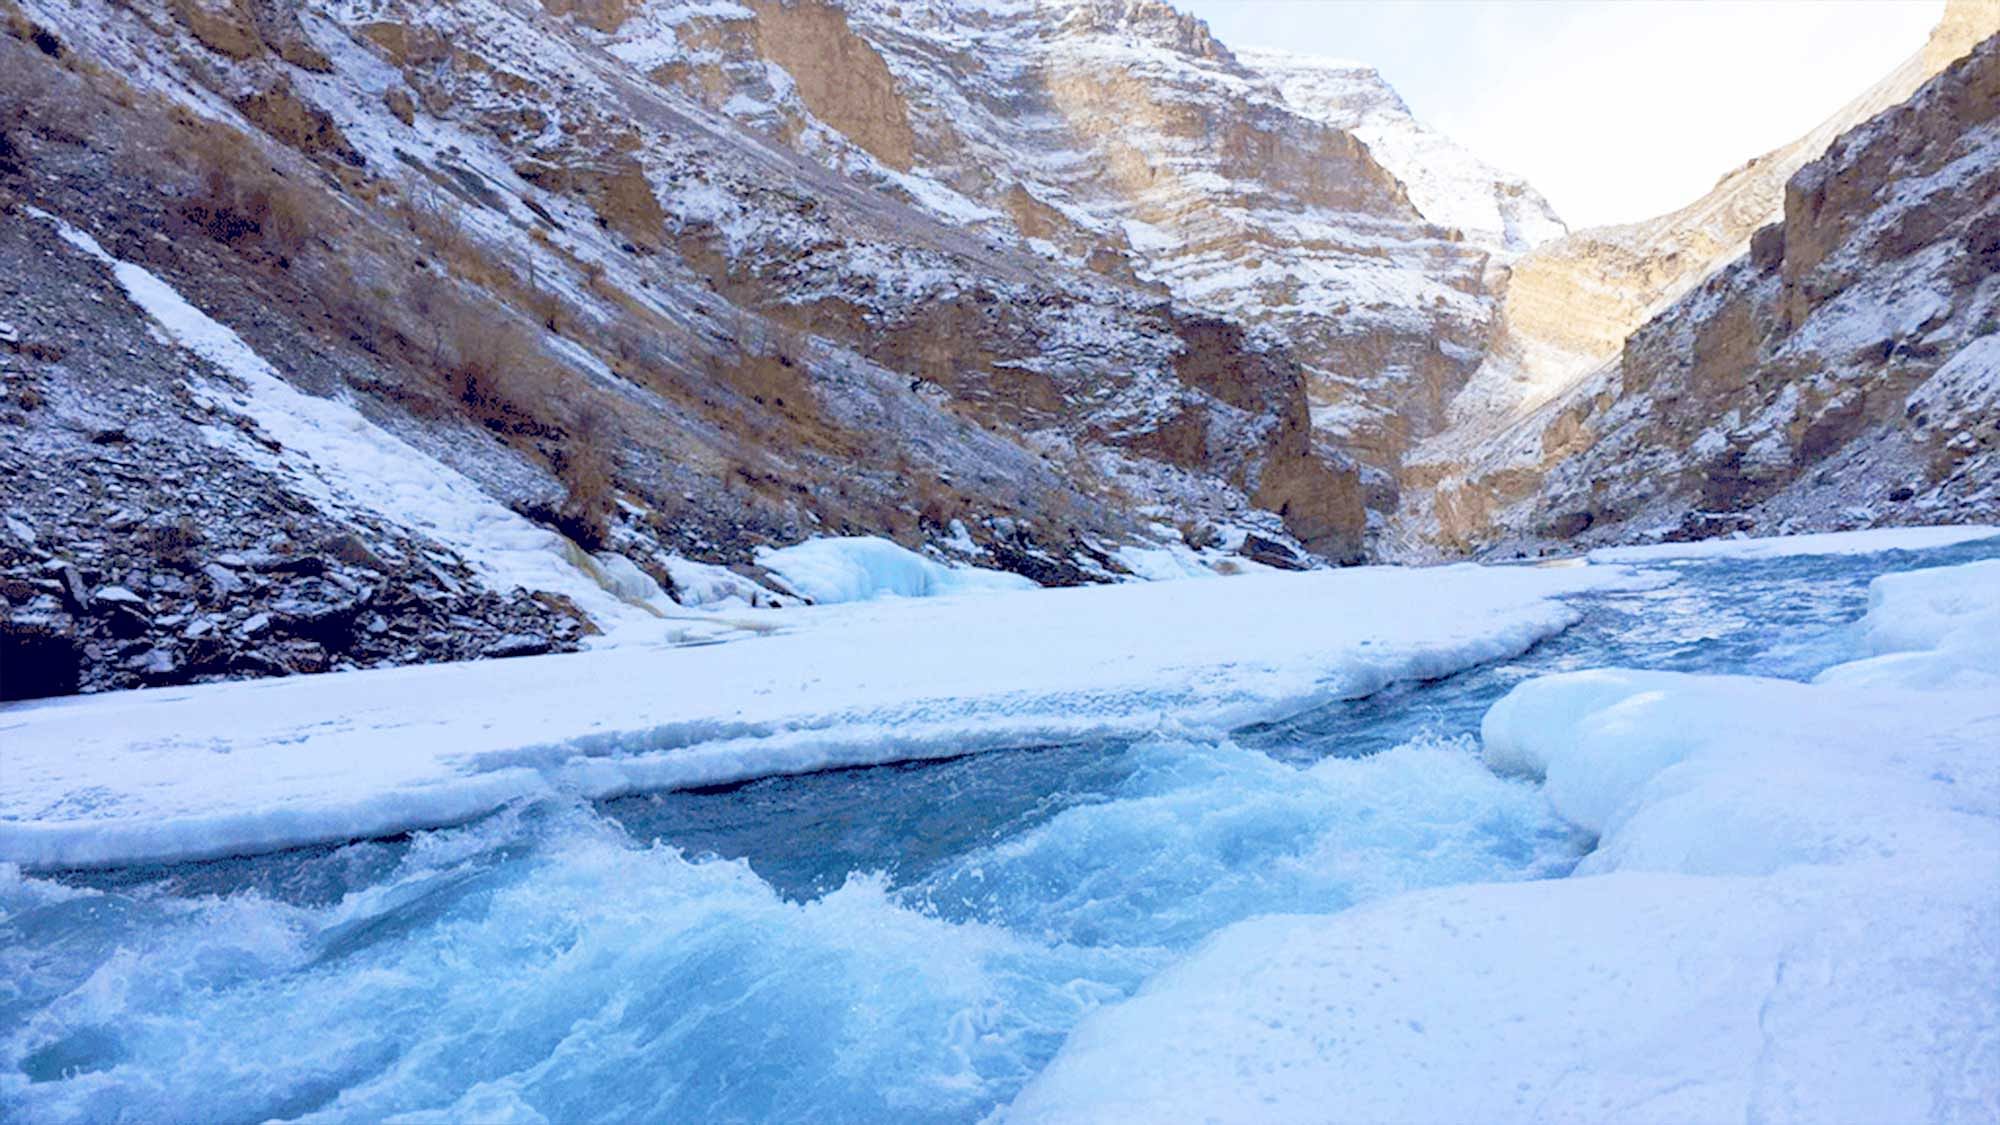 

The frozen Zanskar river in Ladakh (Photo: Praman Narain)